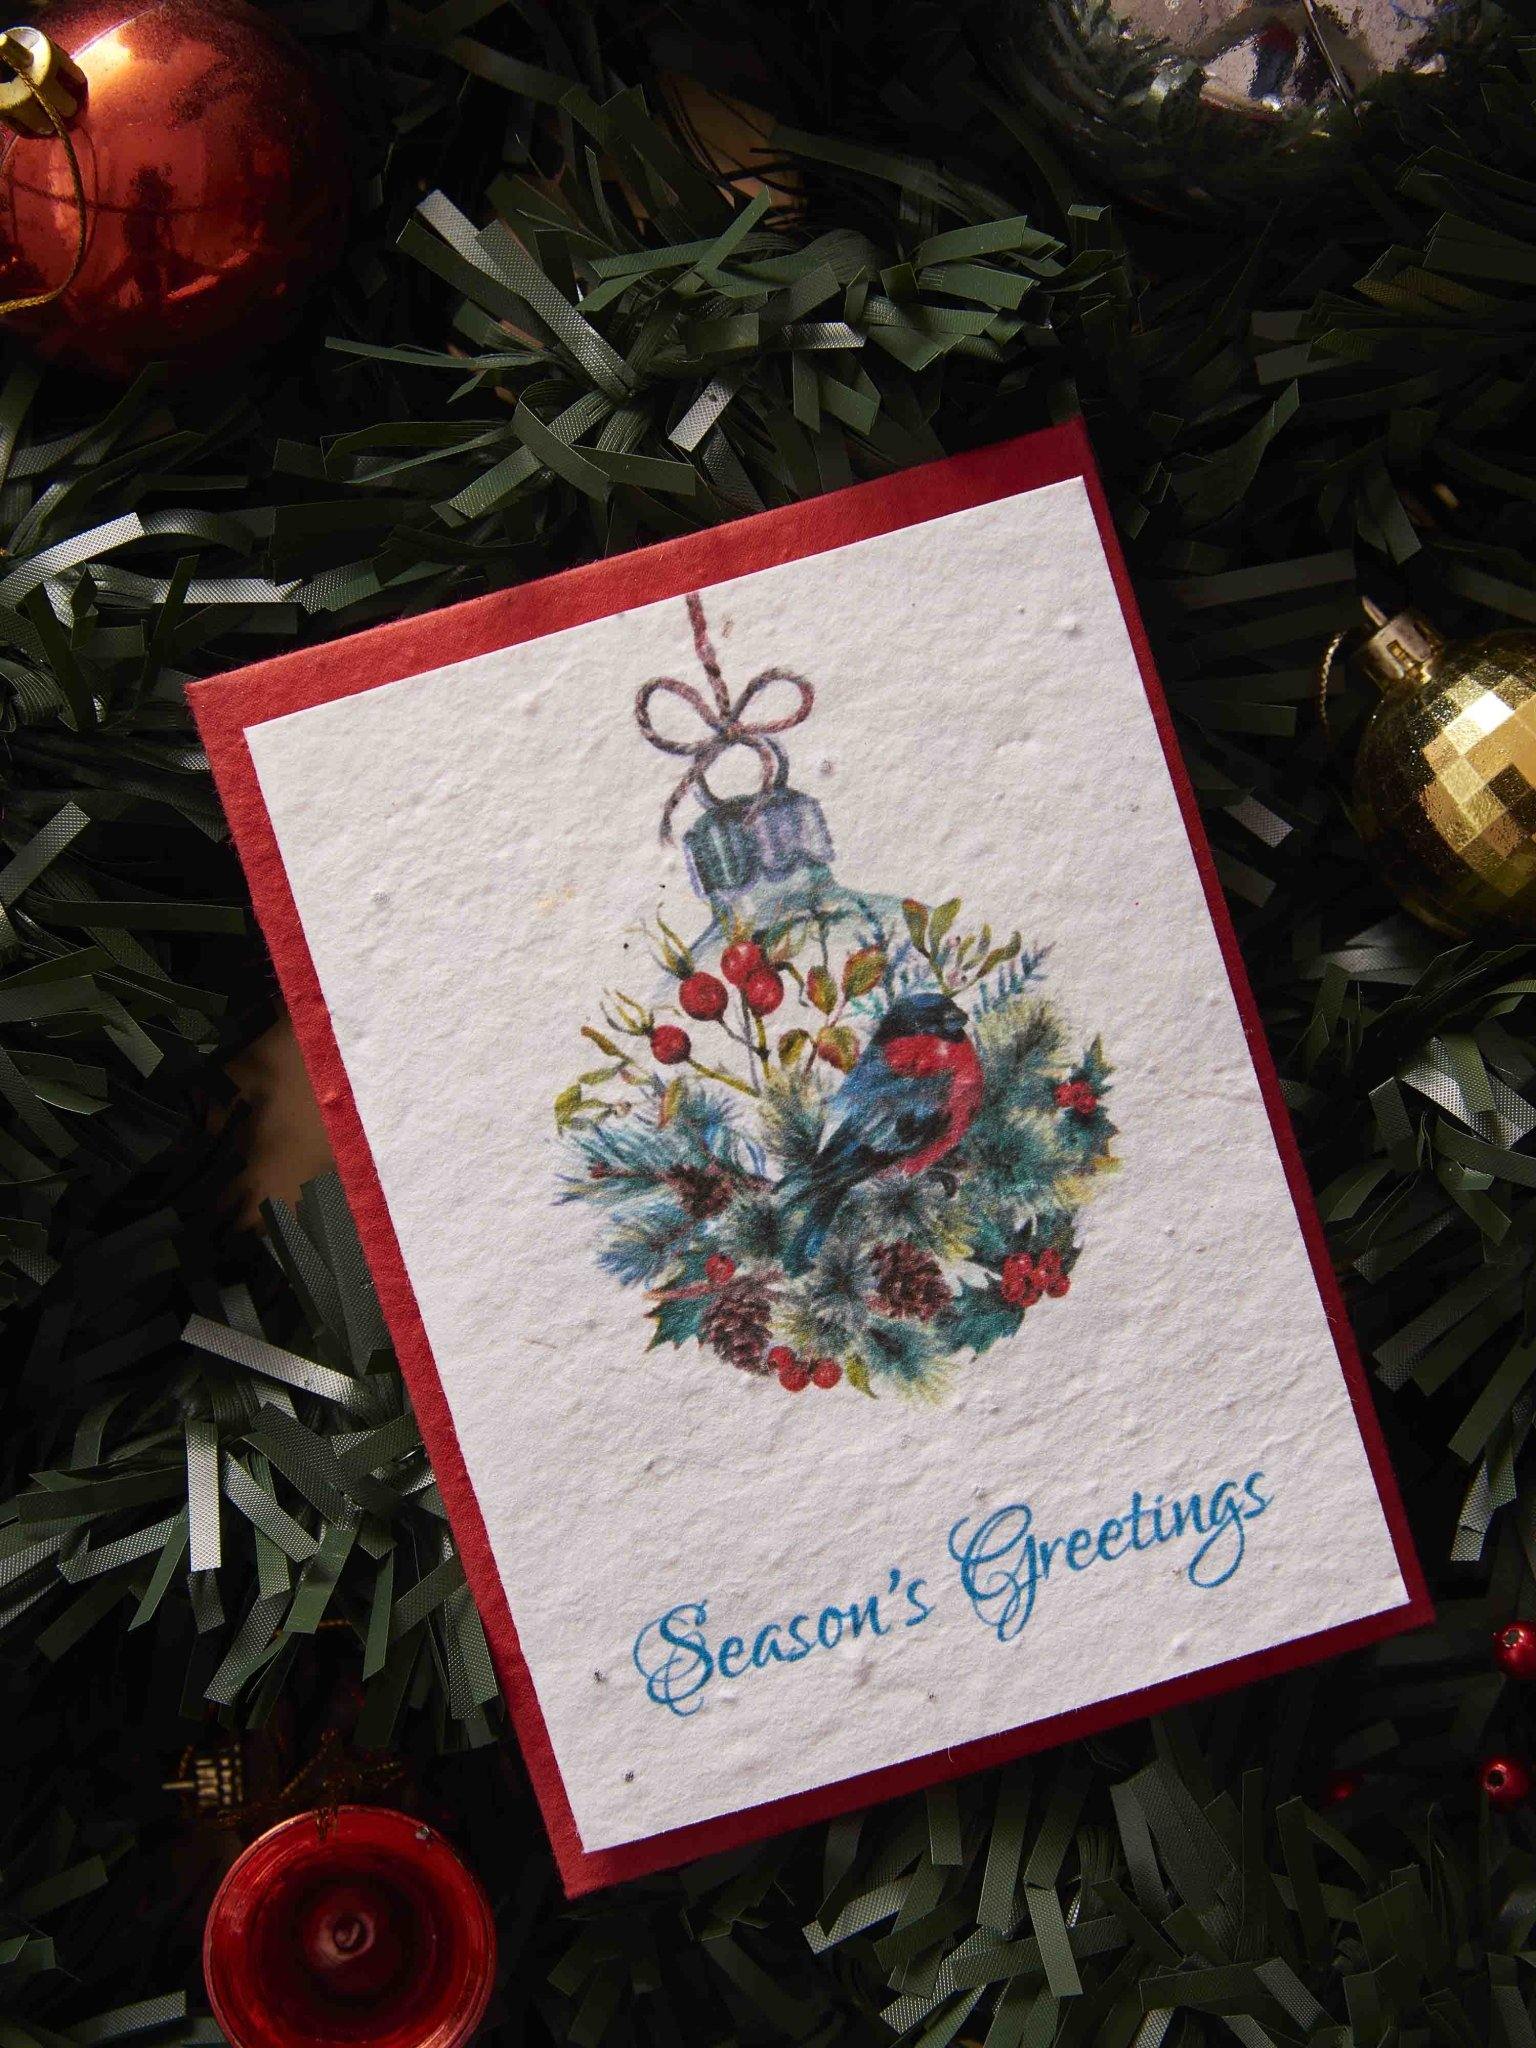  Handmade season greeting cards for Merry Christmas